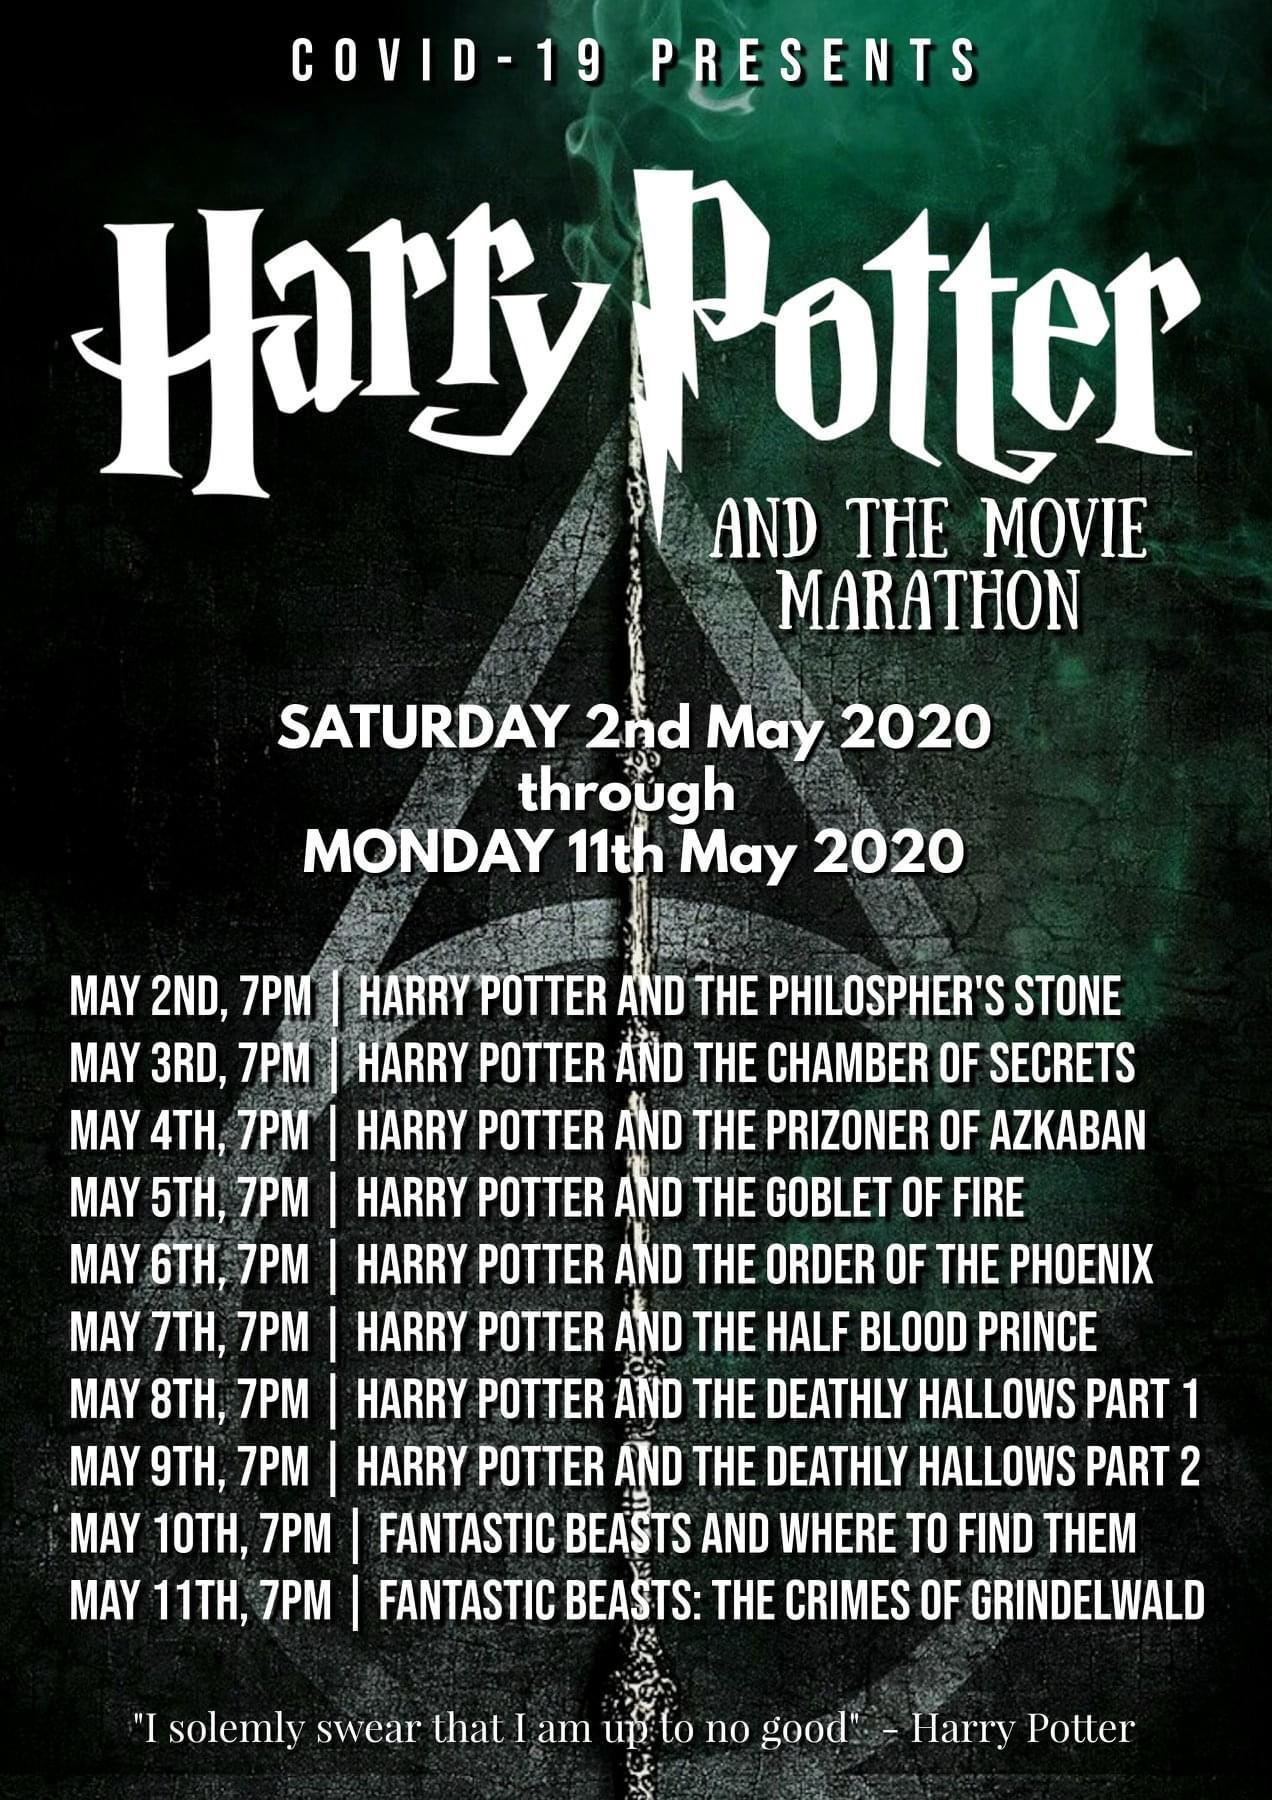 The Harry Potter Movie Marathon Guide